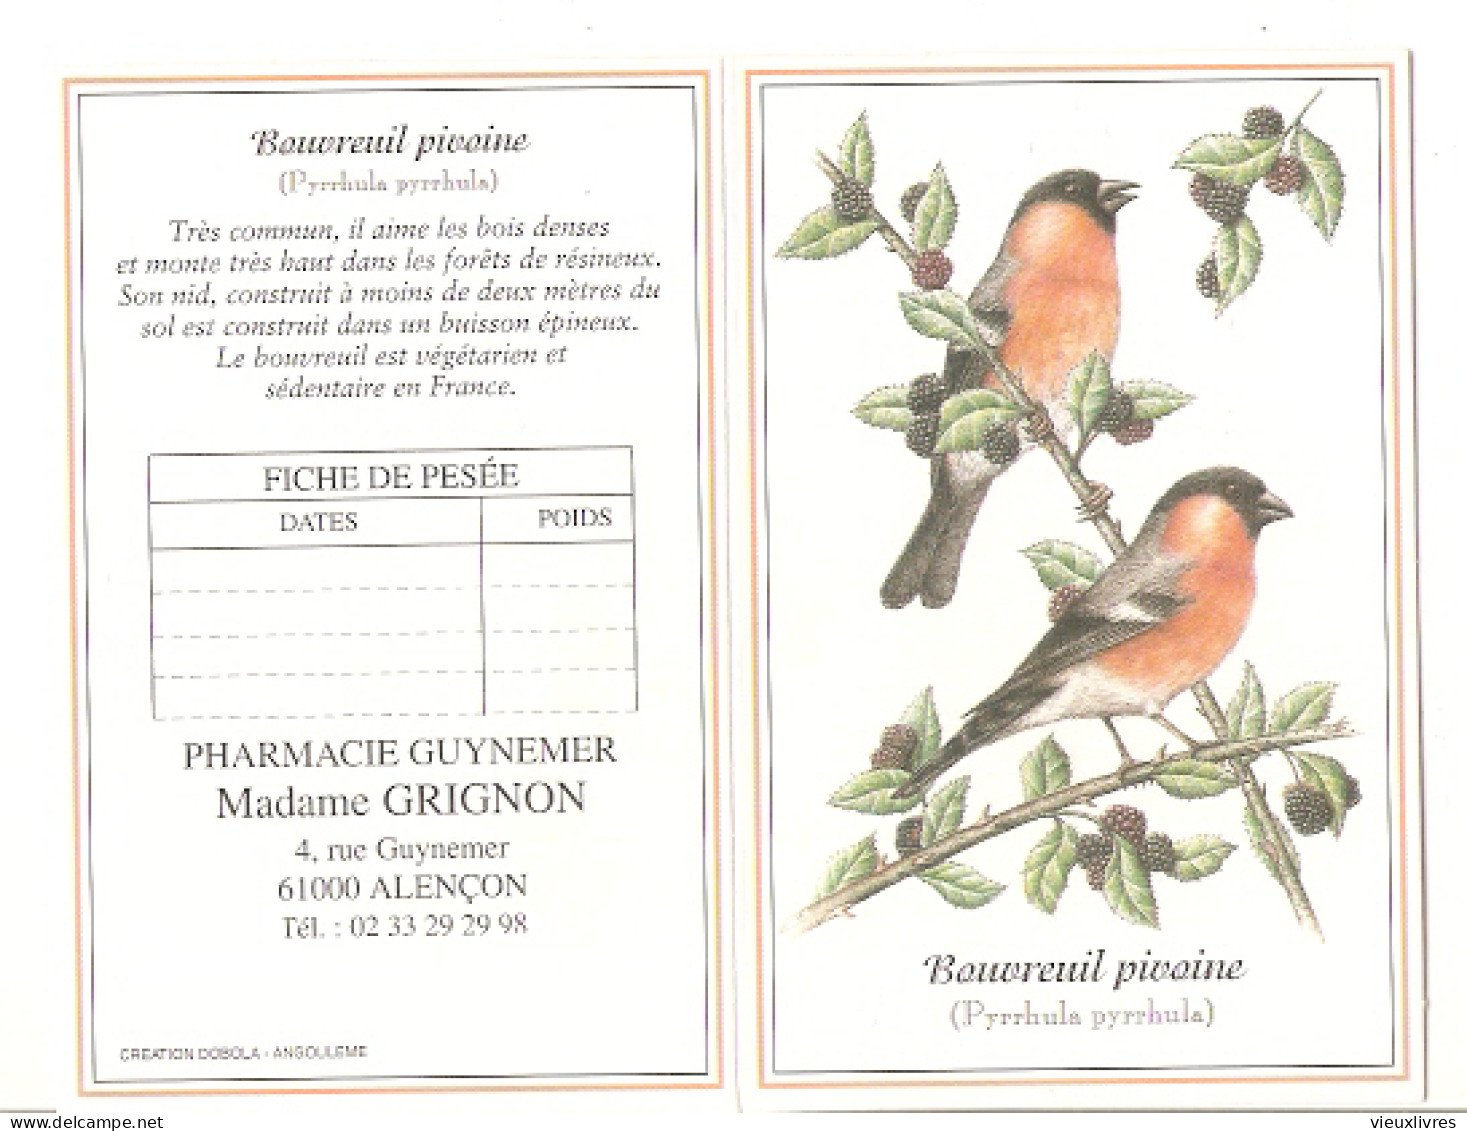 Calendrier De Poche Bouvreuil Pivoine Orne Alençon Pharmacie 2000 - Small : 1991-00